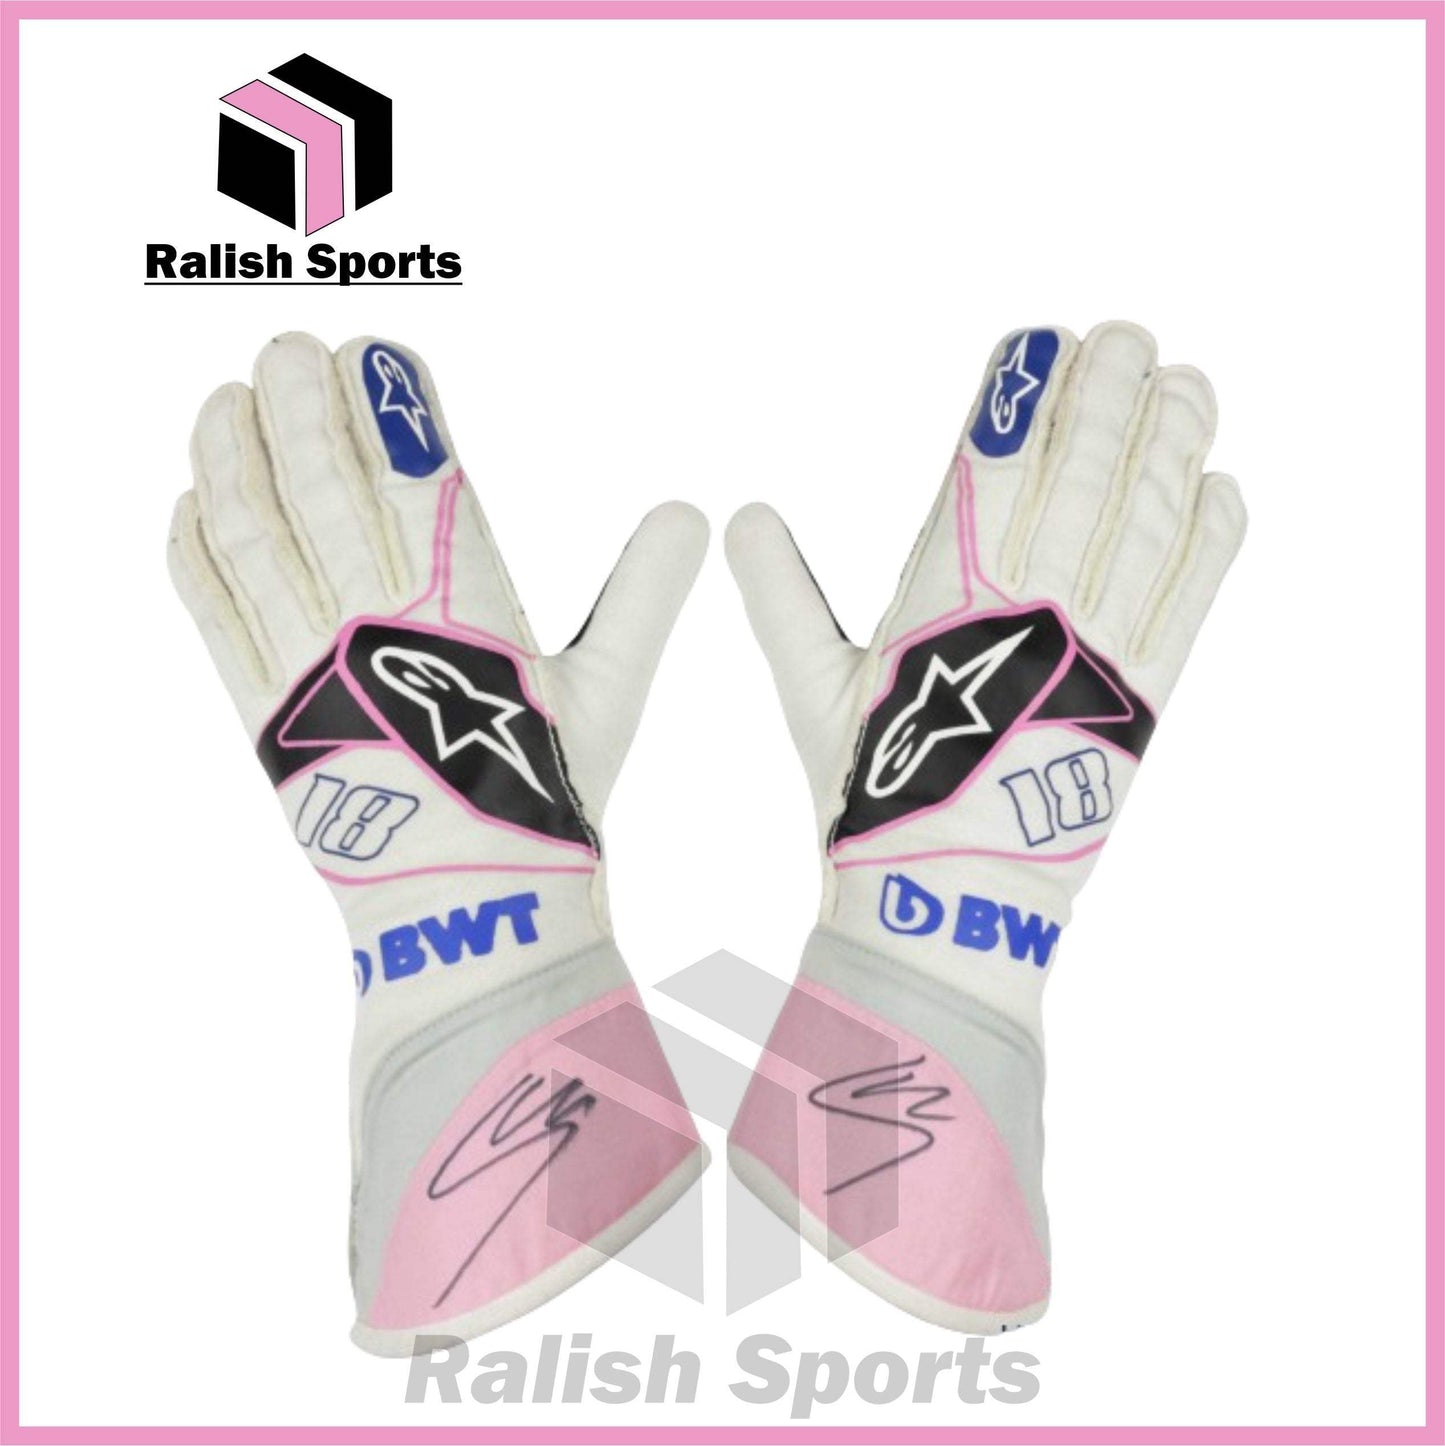 Lance Stroll 2019 Gloves - Ralish Sports